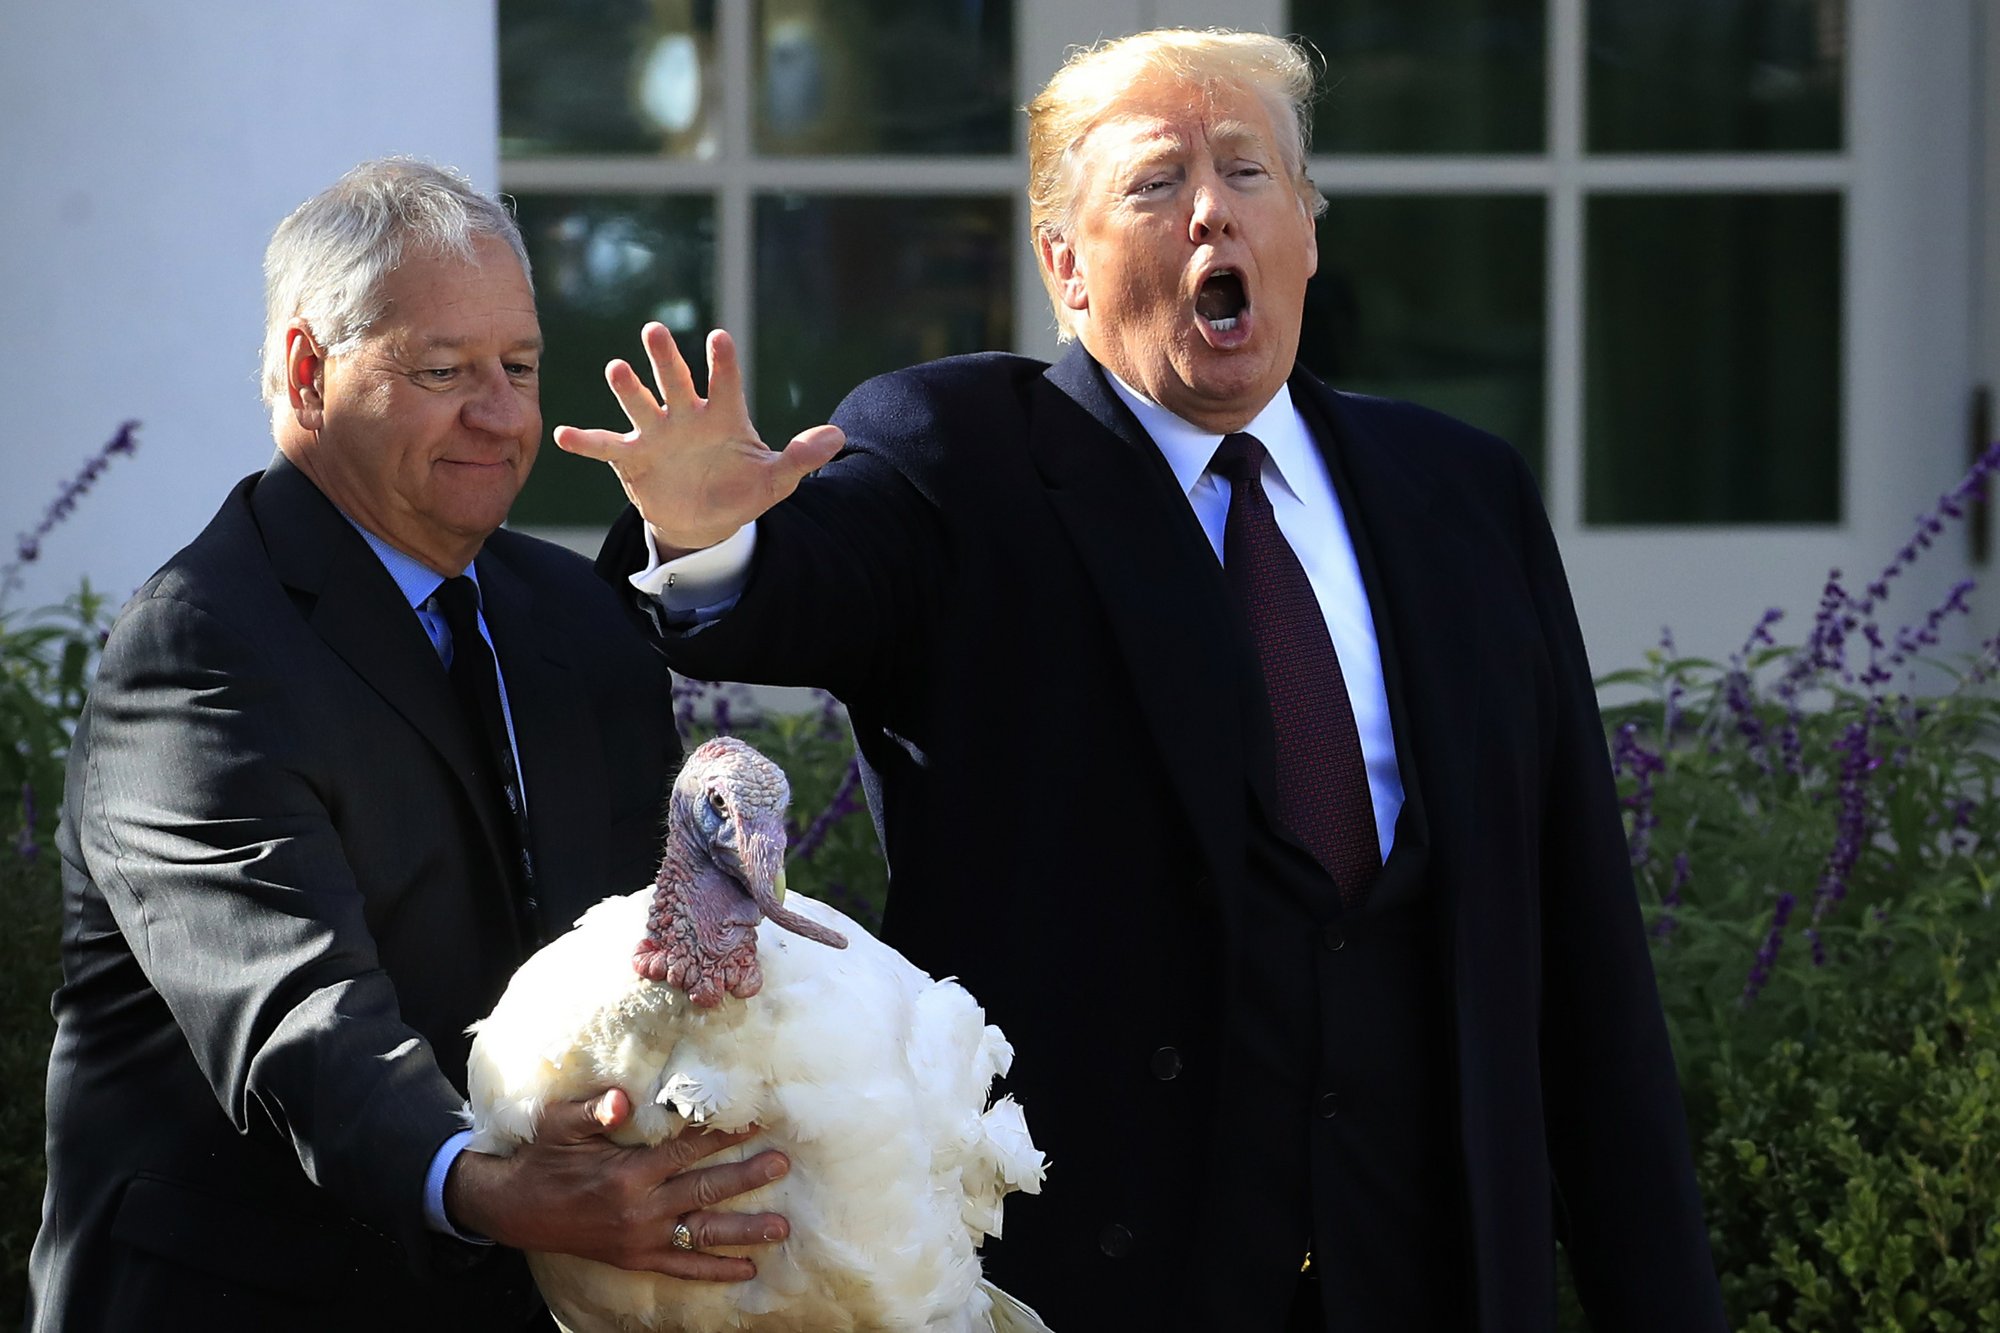 Trump grants poultry pardons to turkeys Peas and Carrots